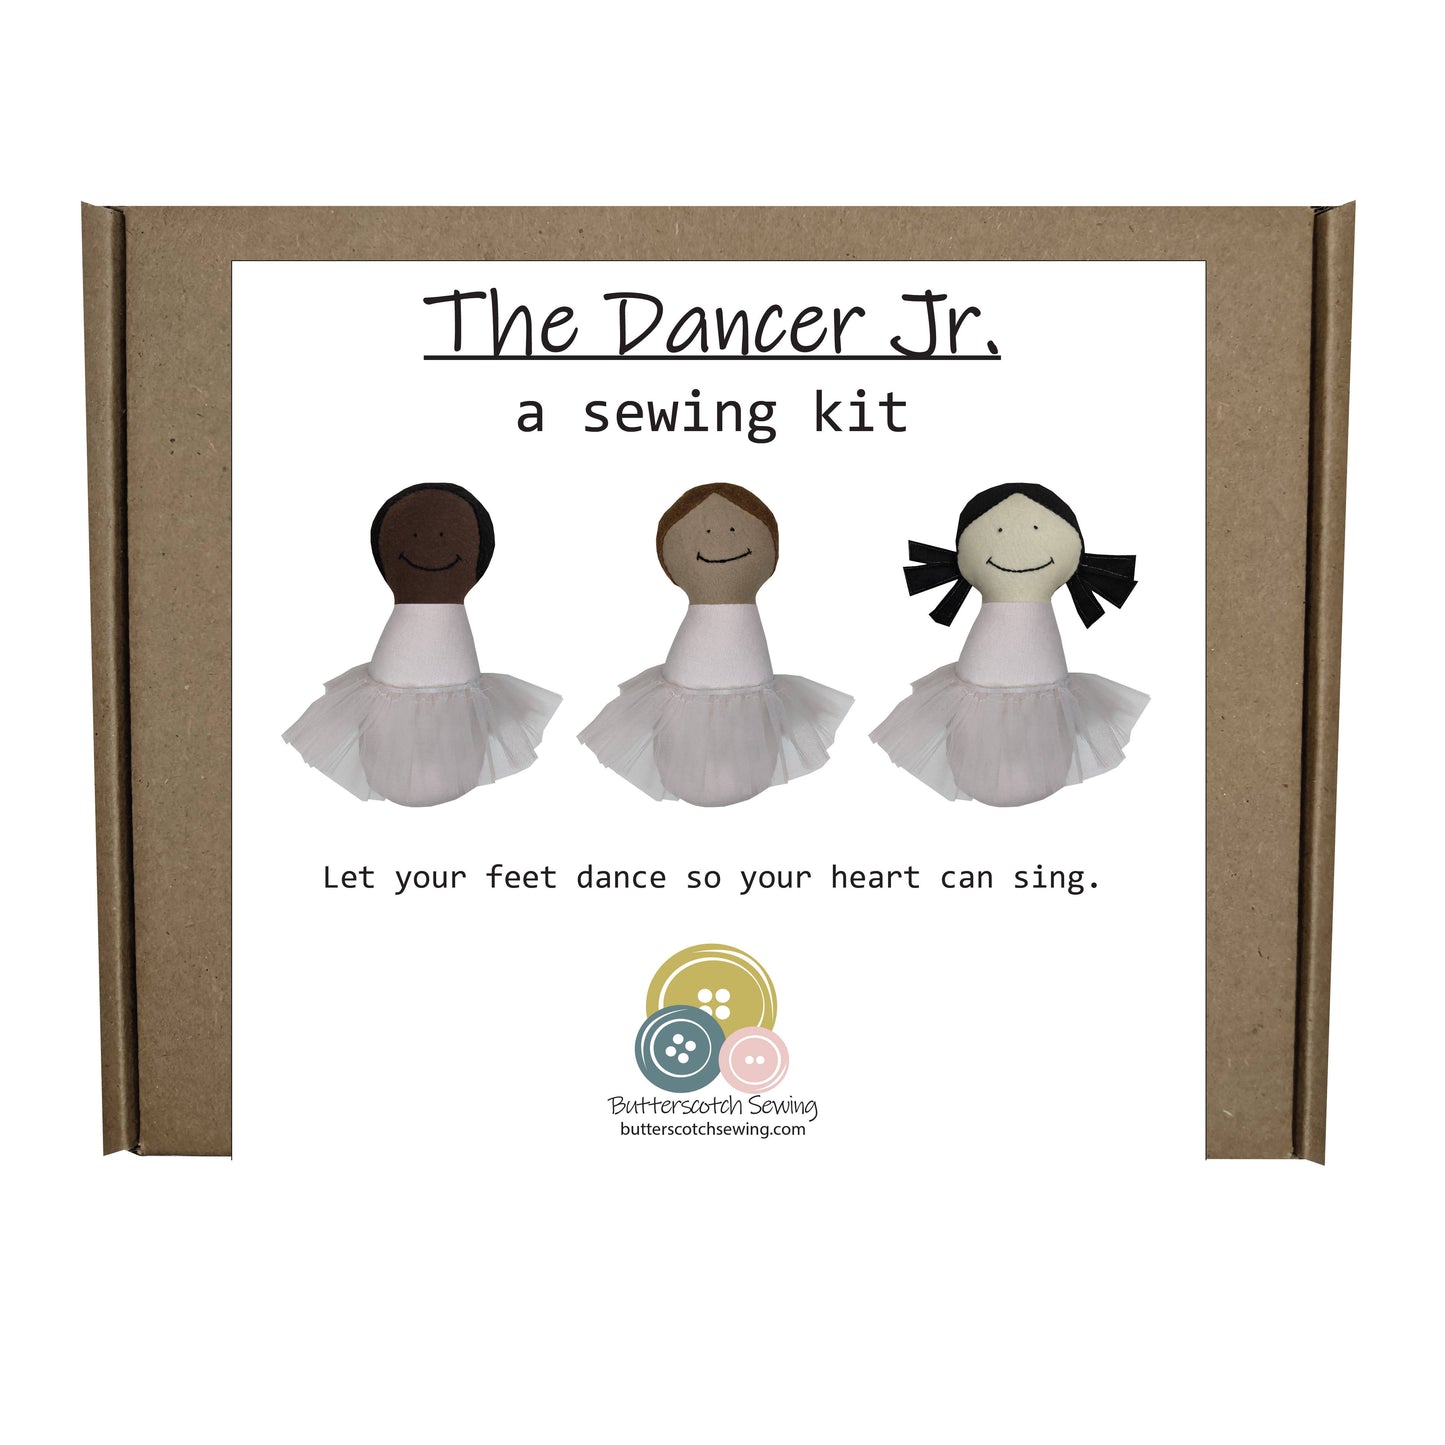 The Dancer Jr. Sewing Kit